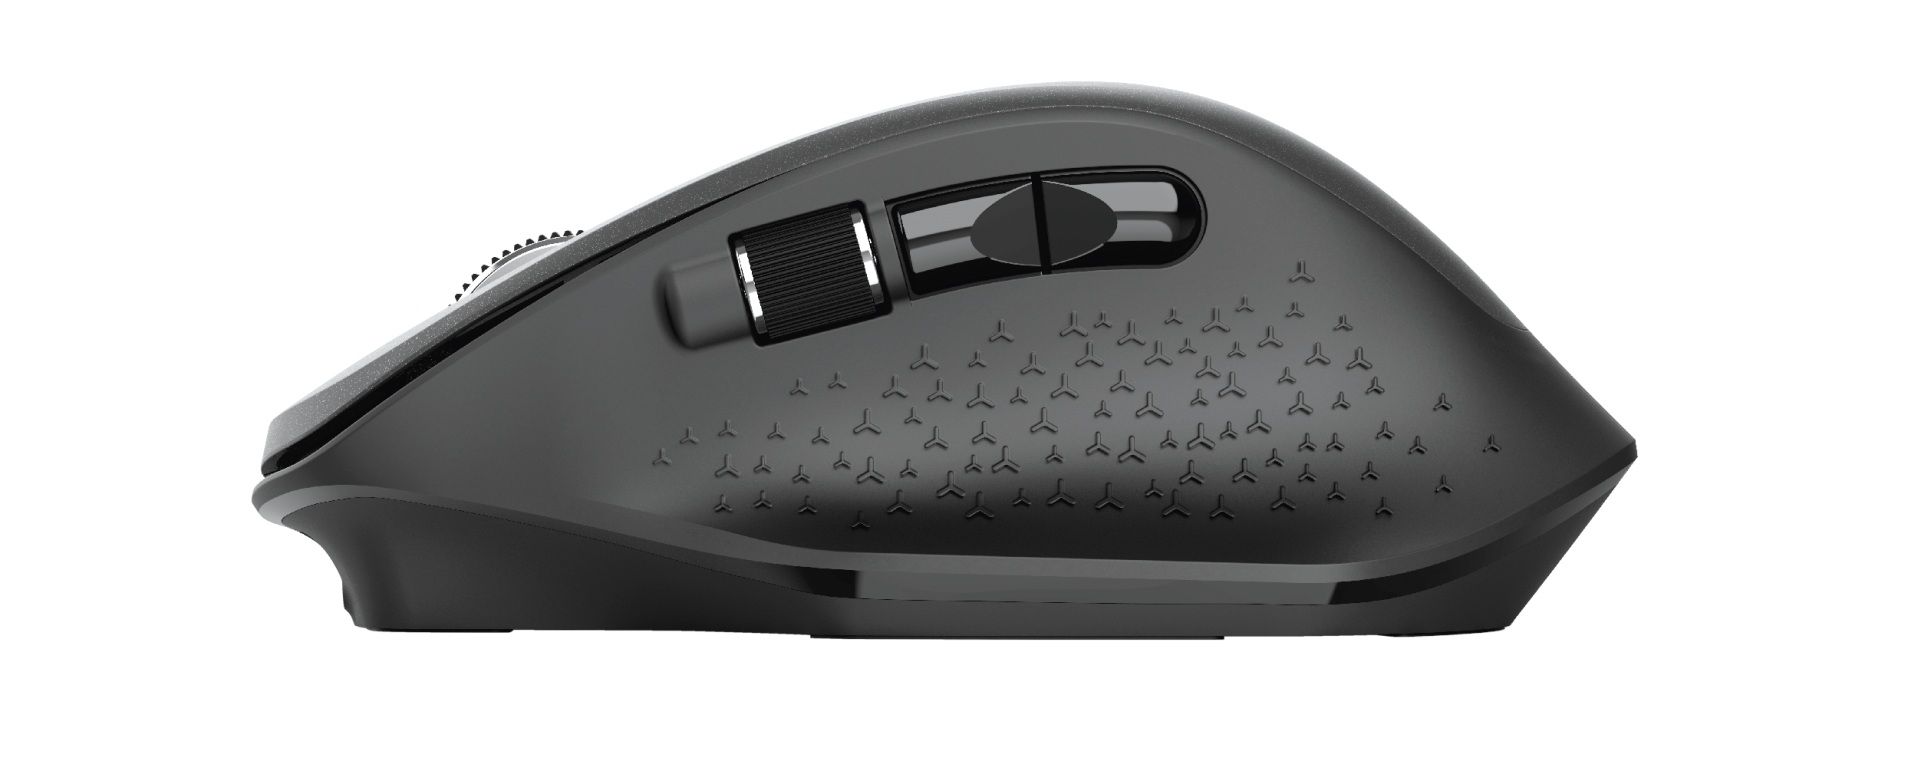 Trust OZAA Rechargeable Wireless Mouse - Black (23812)